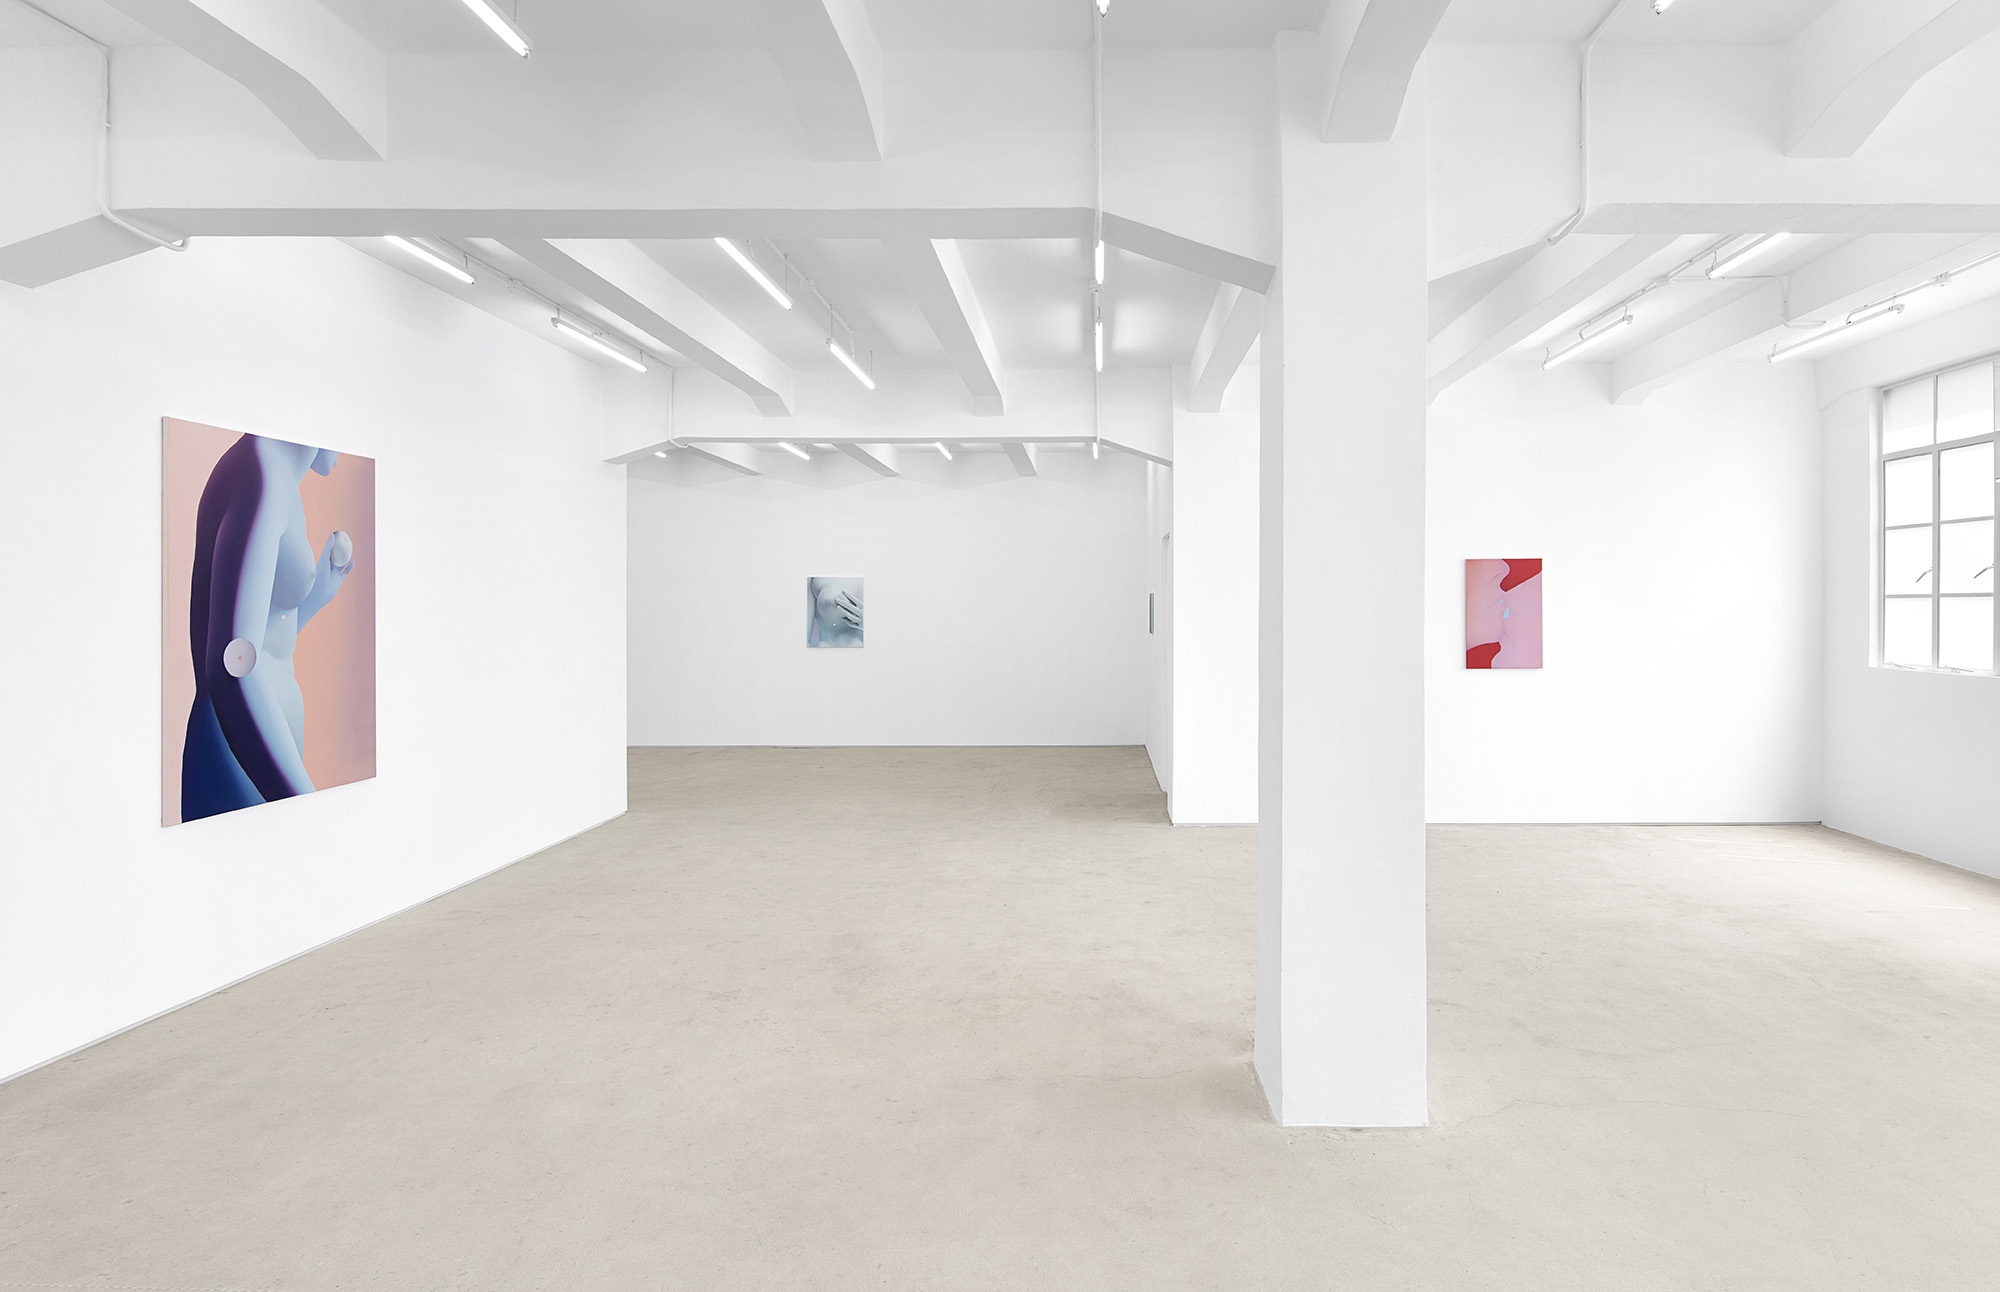 Vivian Greven, The Negatives, solo exhibition at Gallery Vacancy, installation view 8